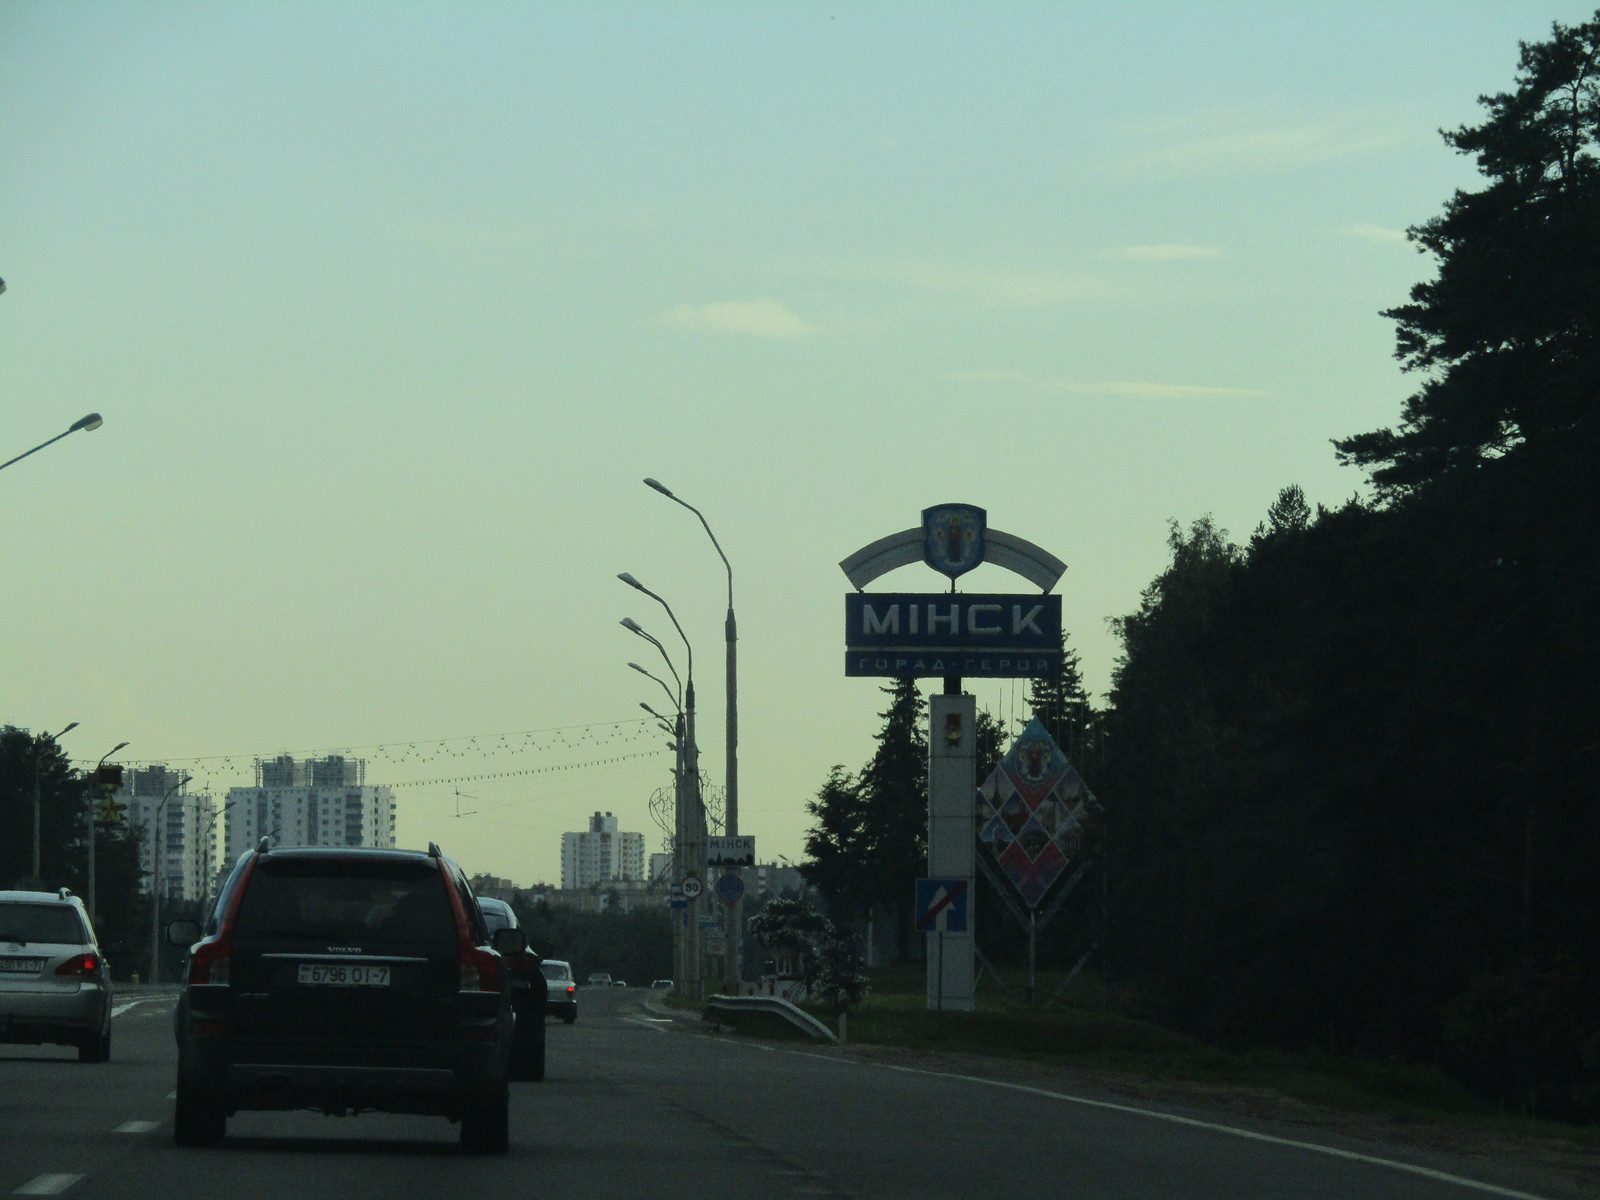 Perm - Belarus - Perm. - Longpost, Ural, Nizhny Novgorod, Minsk, Republic of Belarus, Permian, Road trip, My